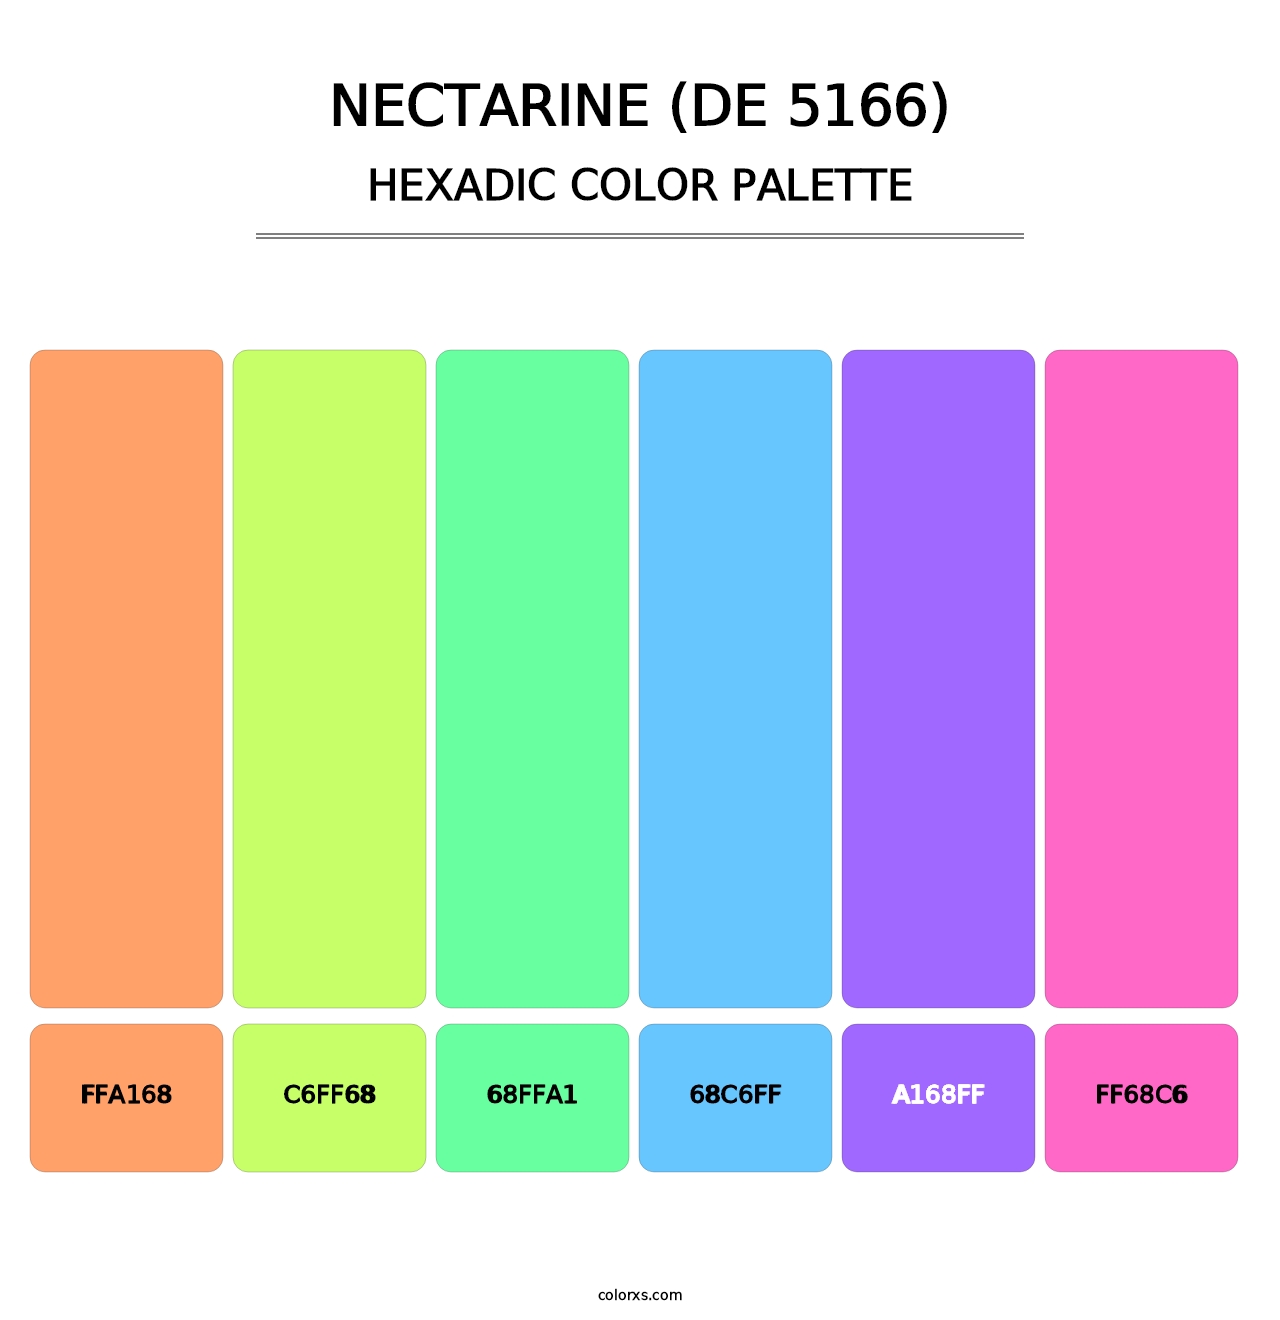 Nectarine (DE 5166) - Hexadic Color Palette